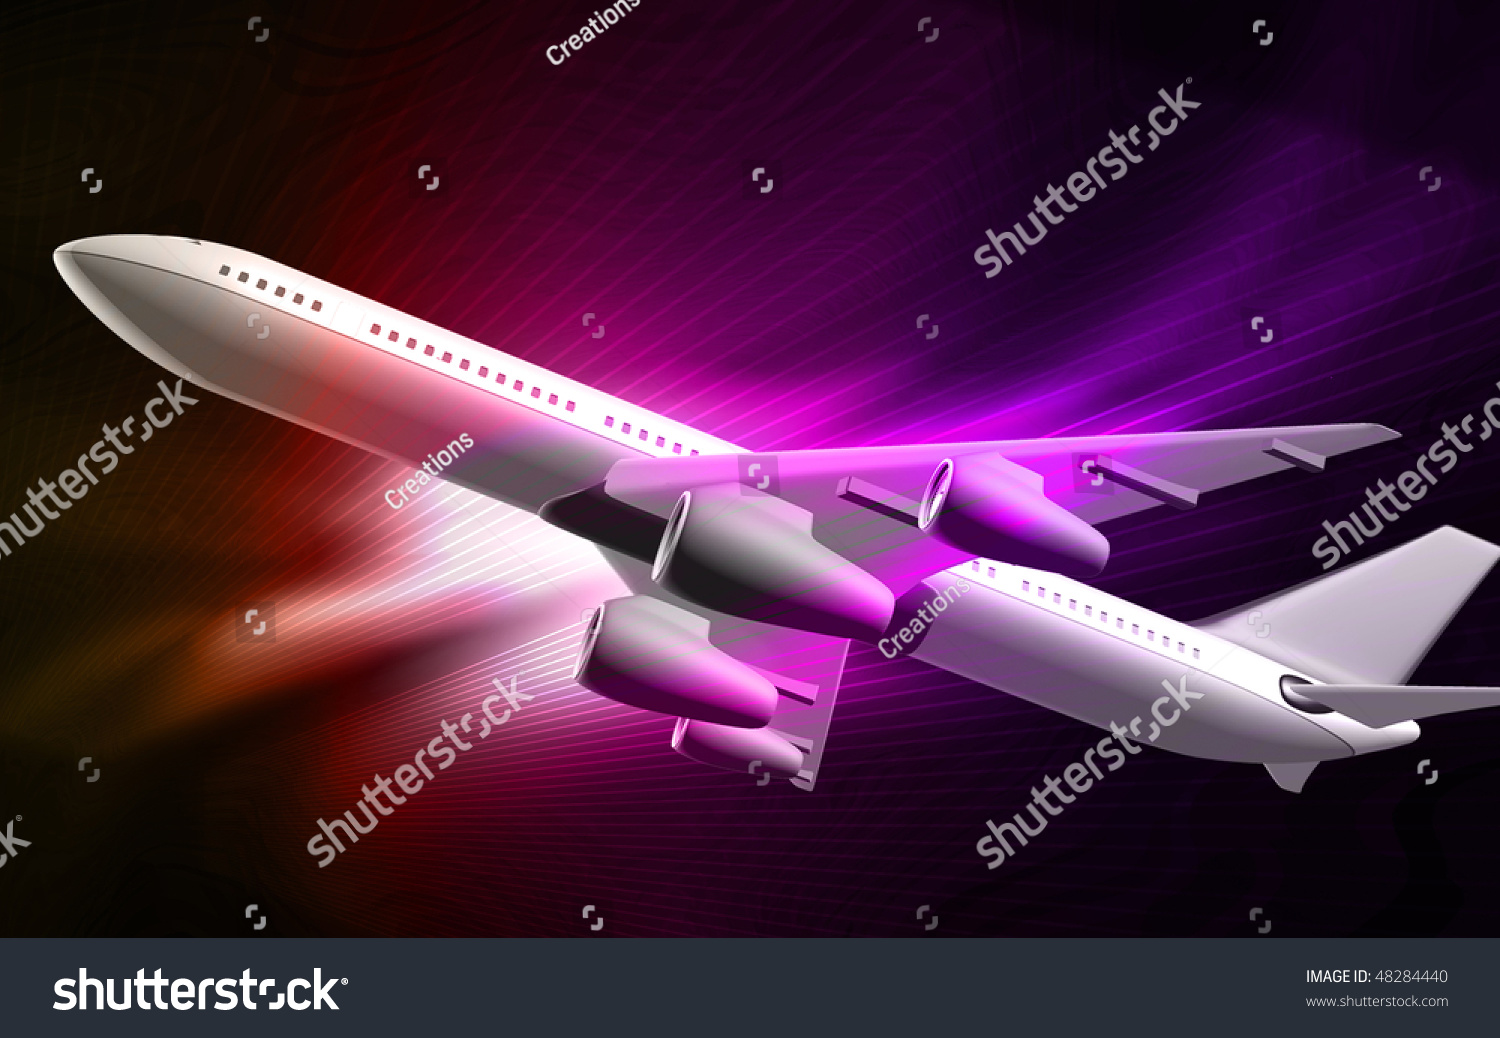 Digital Illustration Of Aeroplane With Colour Background - 48284440